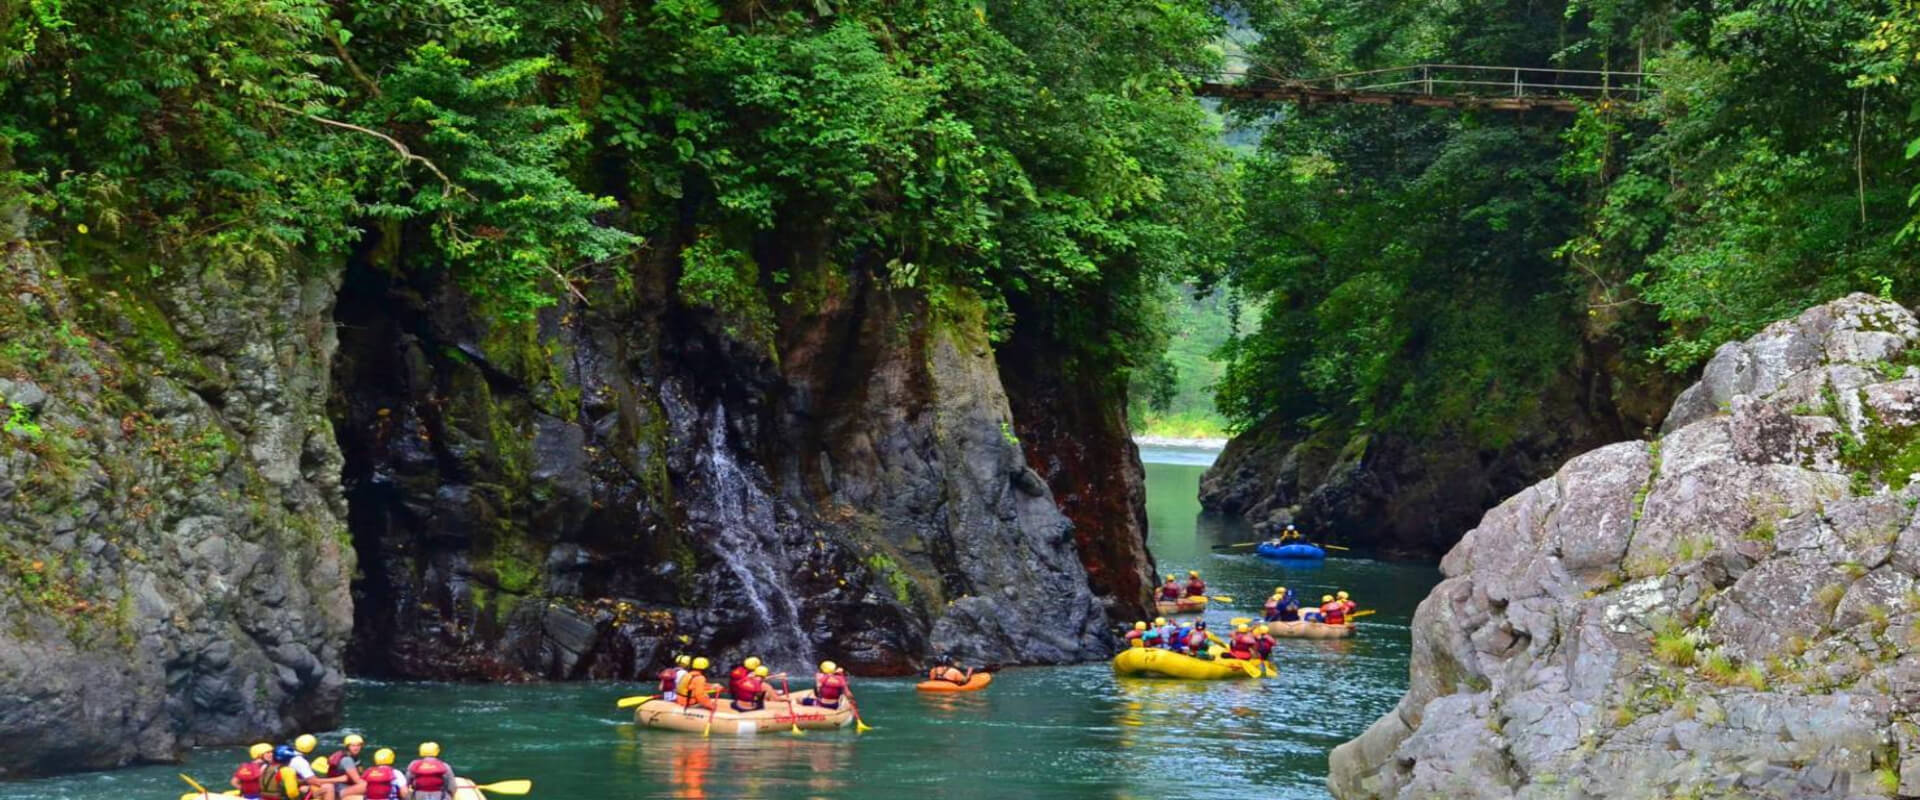 Tortuguero + Rafting en Río Pacuare - 4 días | Costa Rica Jade Tours